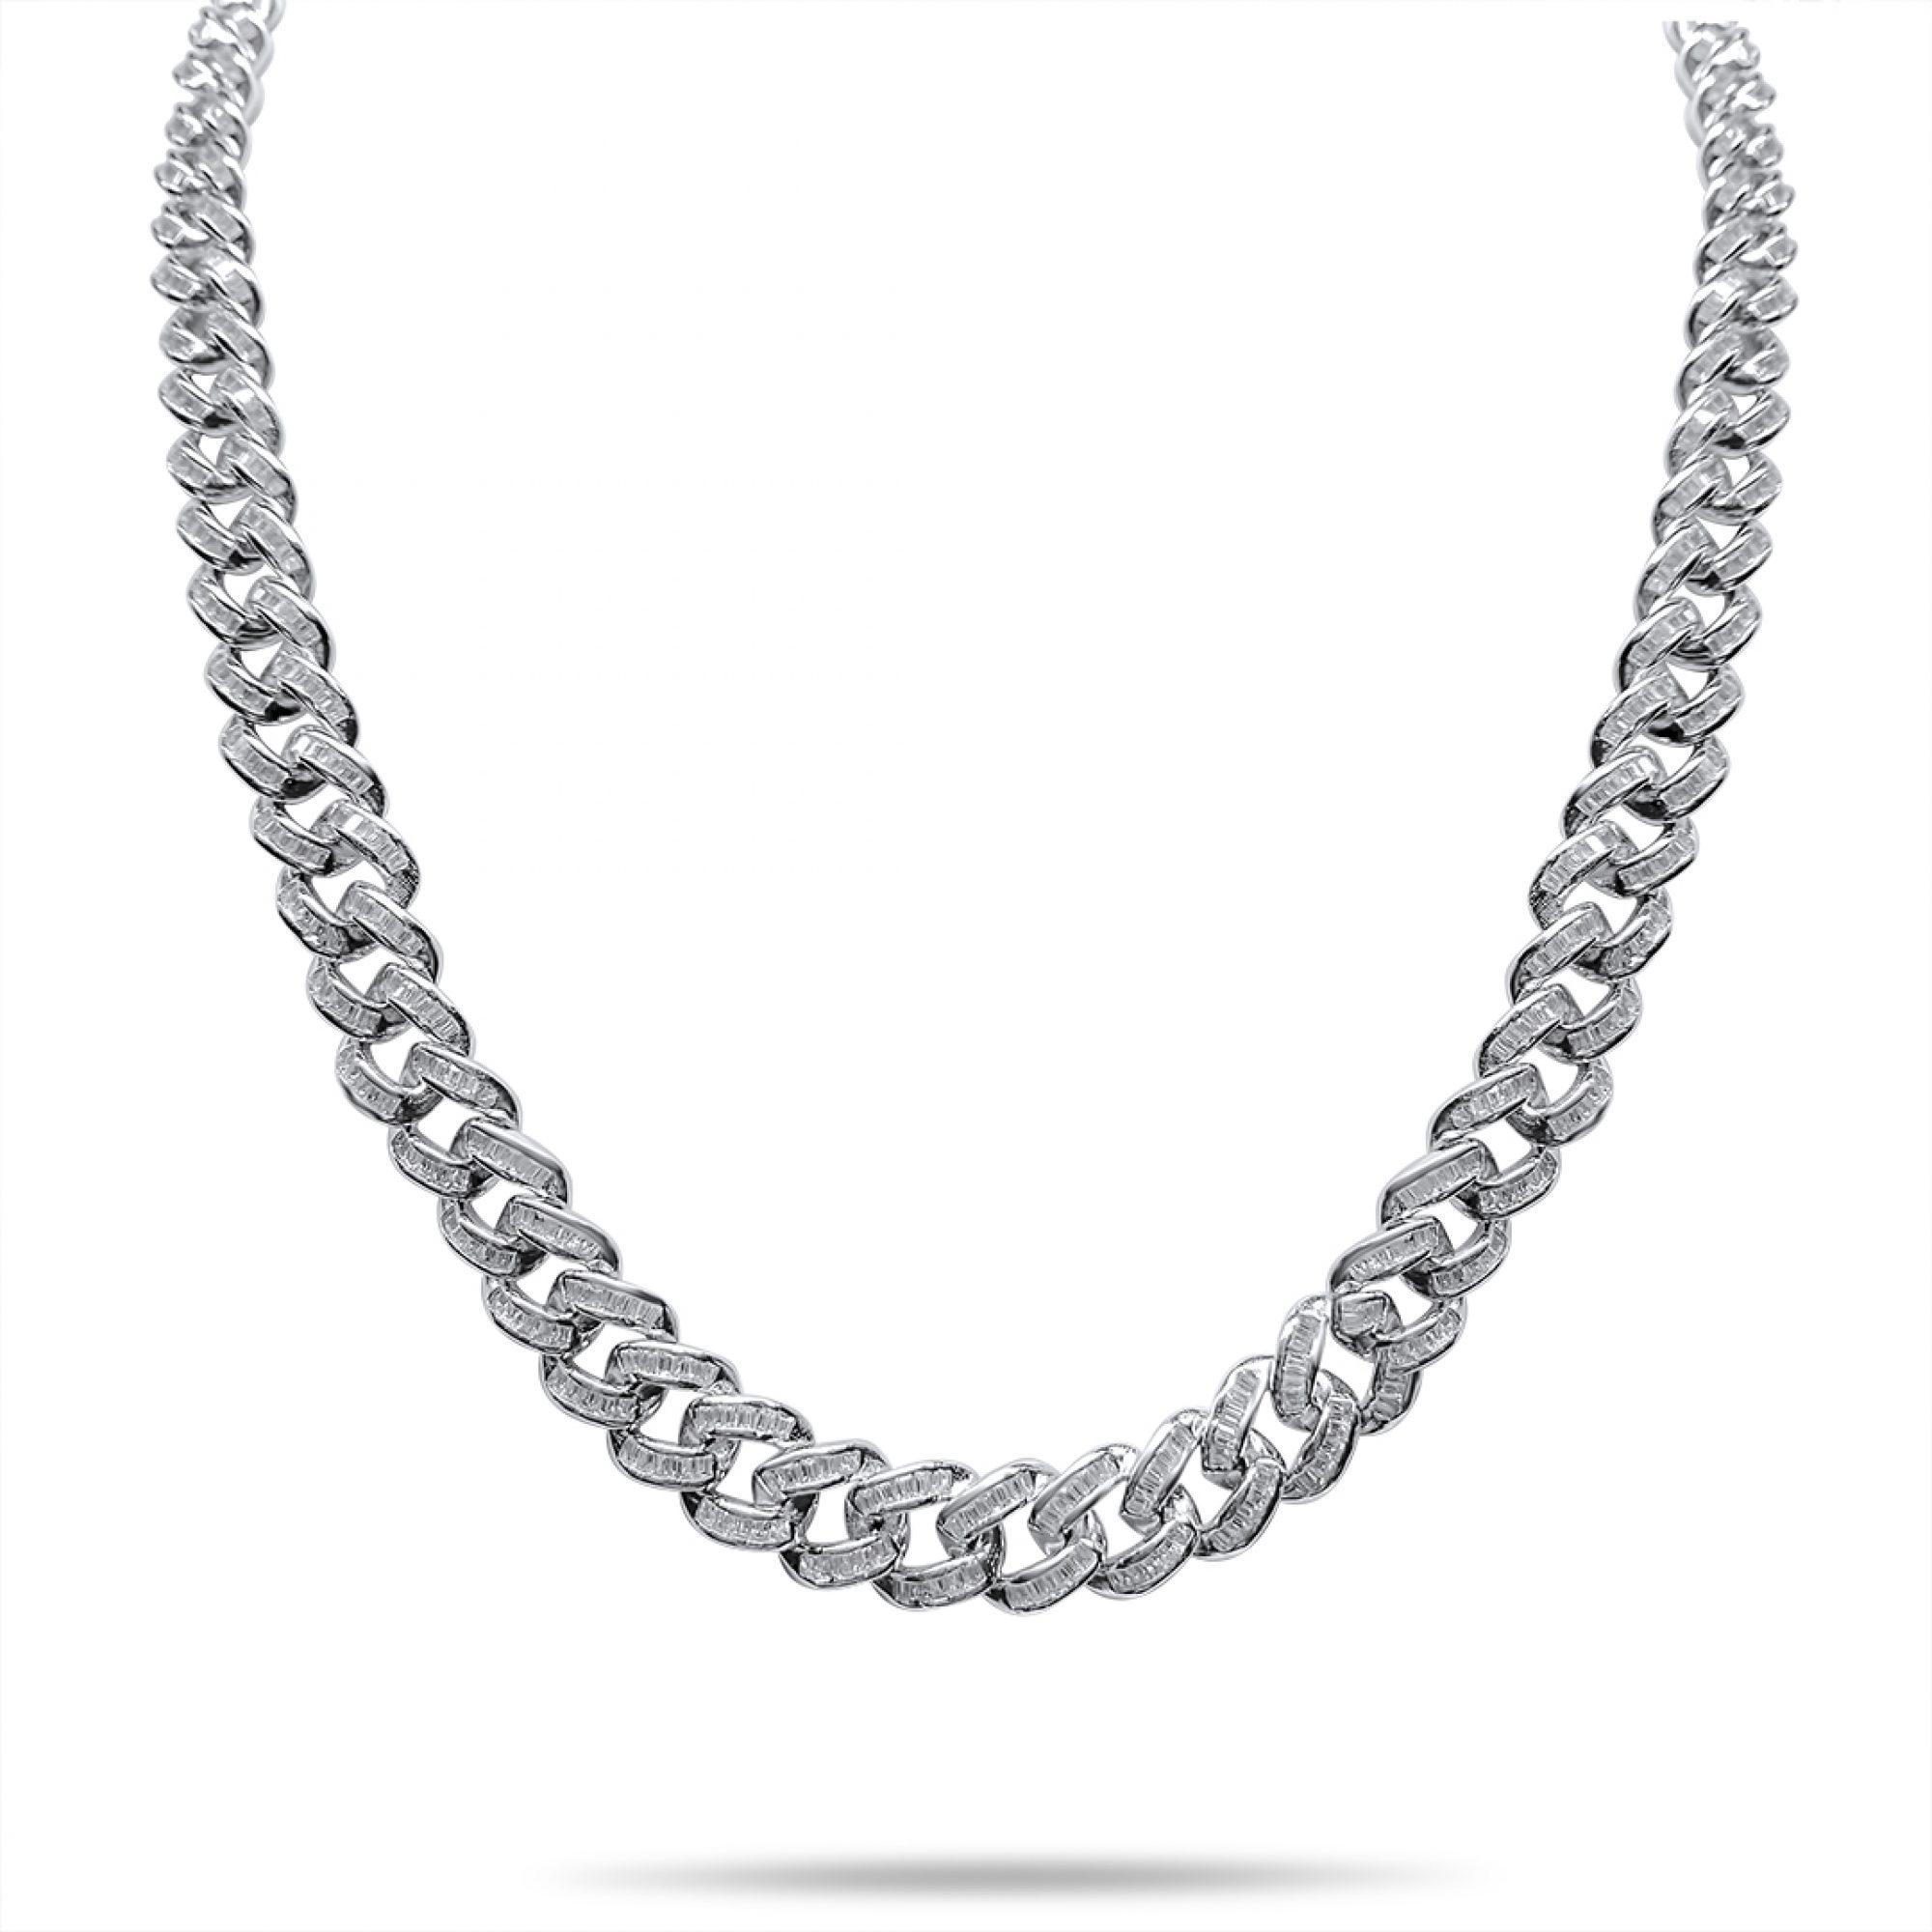 Silver chain with zircon stones